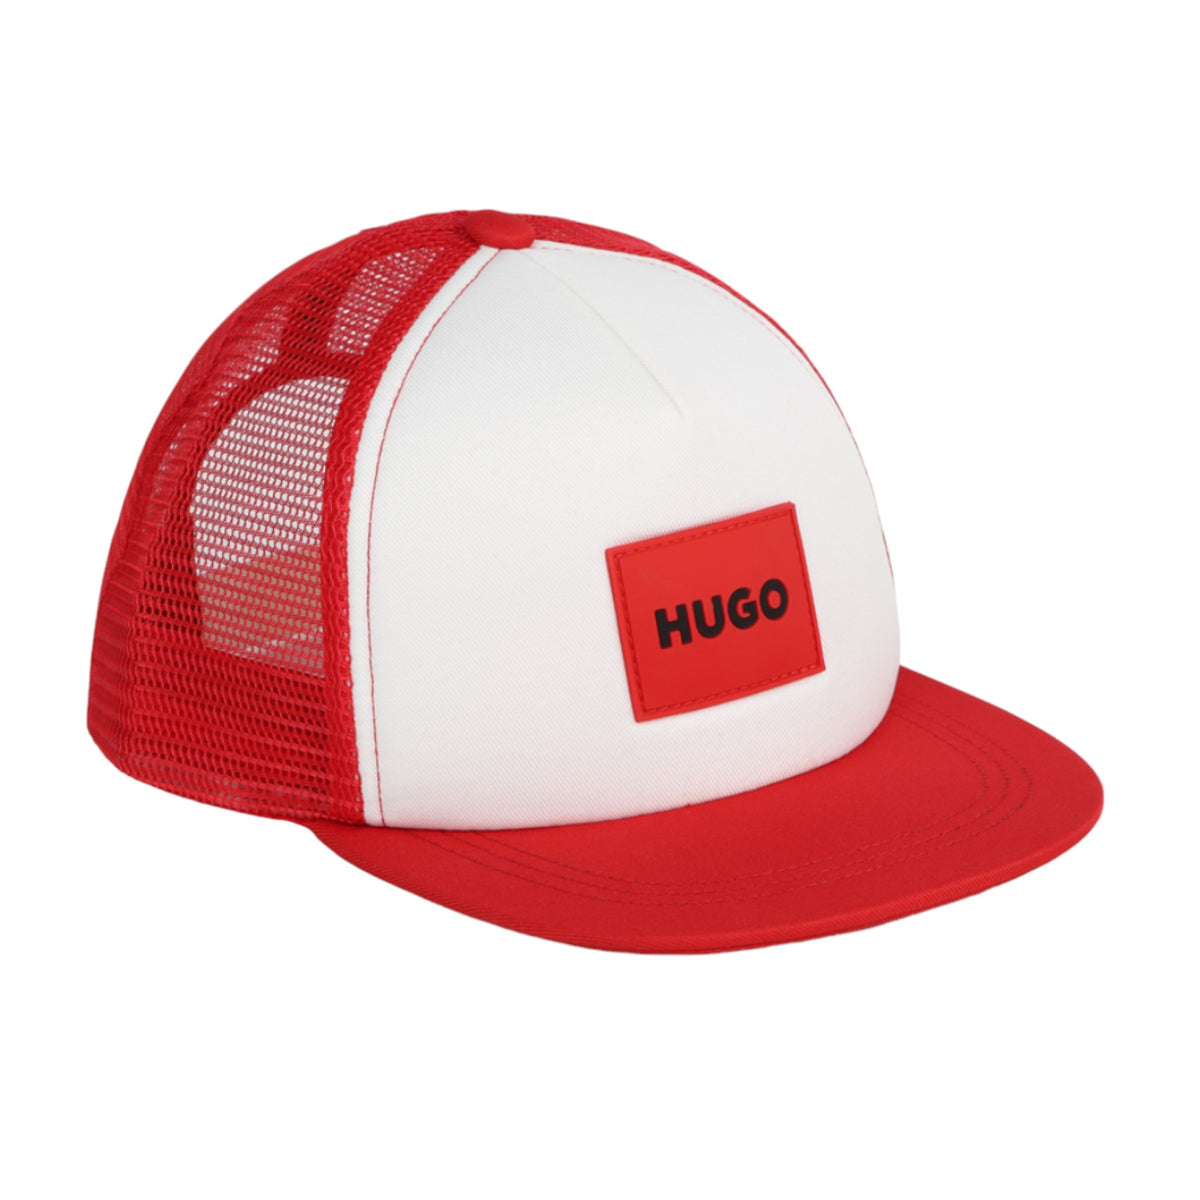 Hugo by Hugo Boss Kids Adjustable Trucker Cap